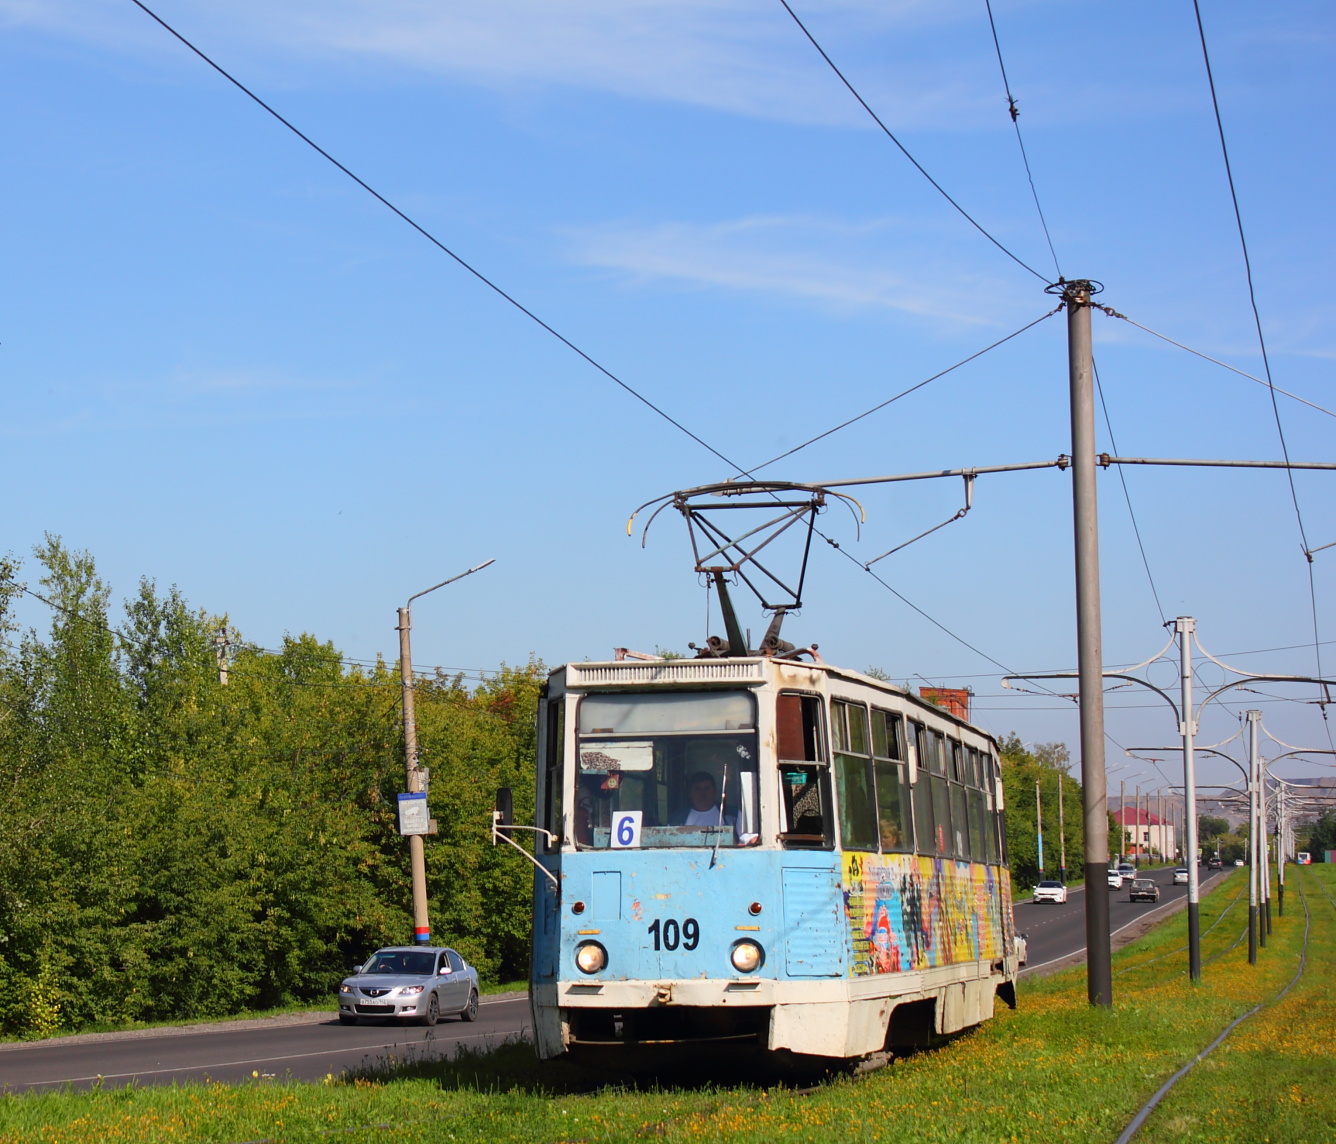 Prokopyevsk, 71-605 (KTM-5M3) nr. 109